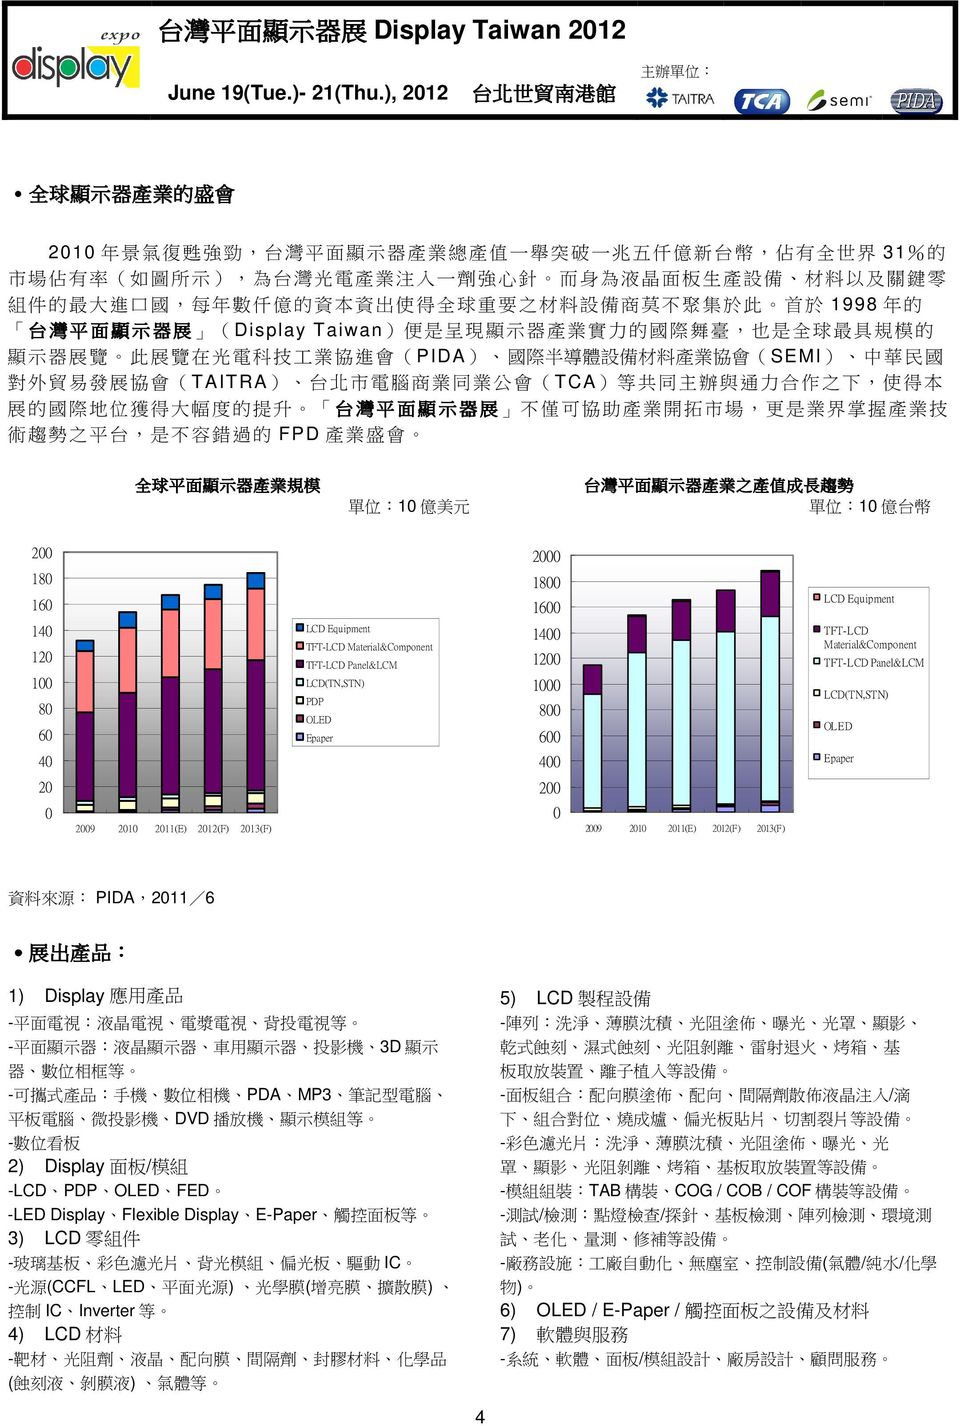 PIDA) 國 際 半 導 體 設 備 材 料 產 業 協 會 ( SEMI) 中 華 民 國 對 外 貿 易 發 展 協 會 (TAITRA) 台 北 市 電 腦 商 業 同 業 公 會 (TCA) 等 共 同 主 辦 與 通 力 合 作 之 下, 使 得 本 展 的 國 際 地 位 獲 得 大 幅 度 的 提 升 台 灣 平 面 顯 示 器 展 不 僅 可 協 助 產 業 開 拓 市 場,